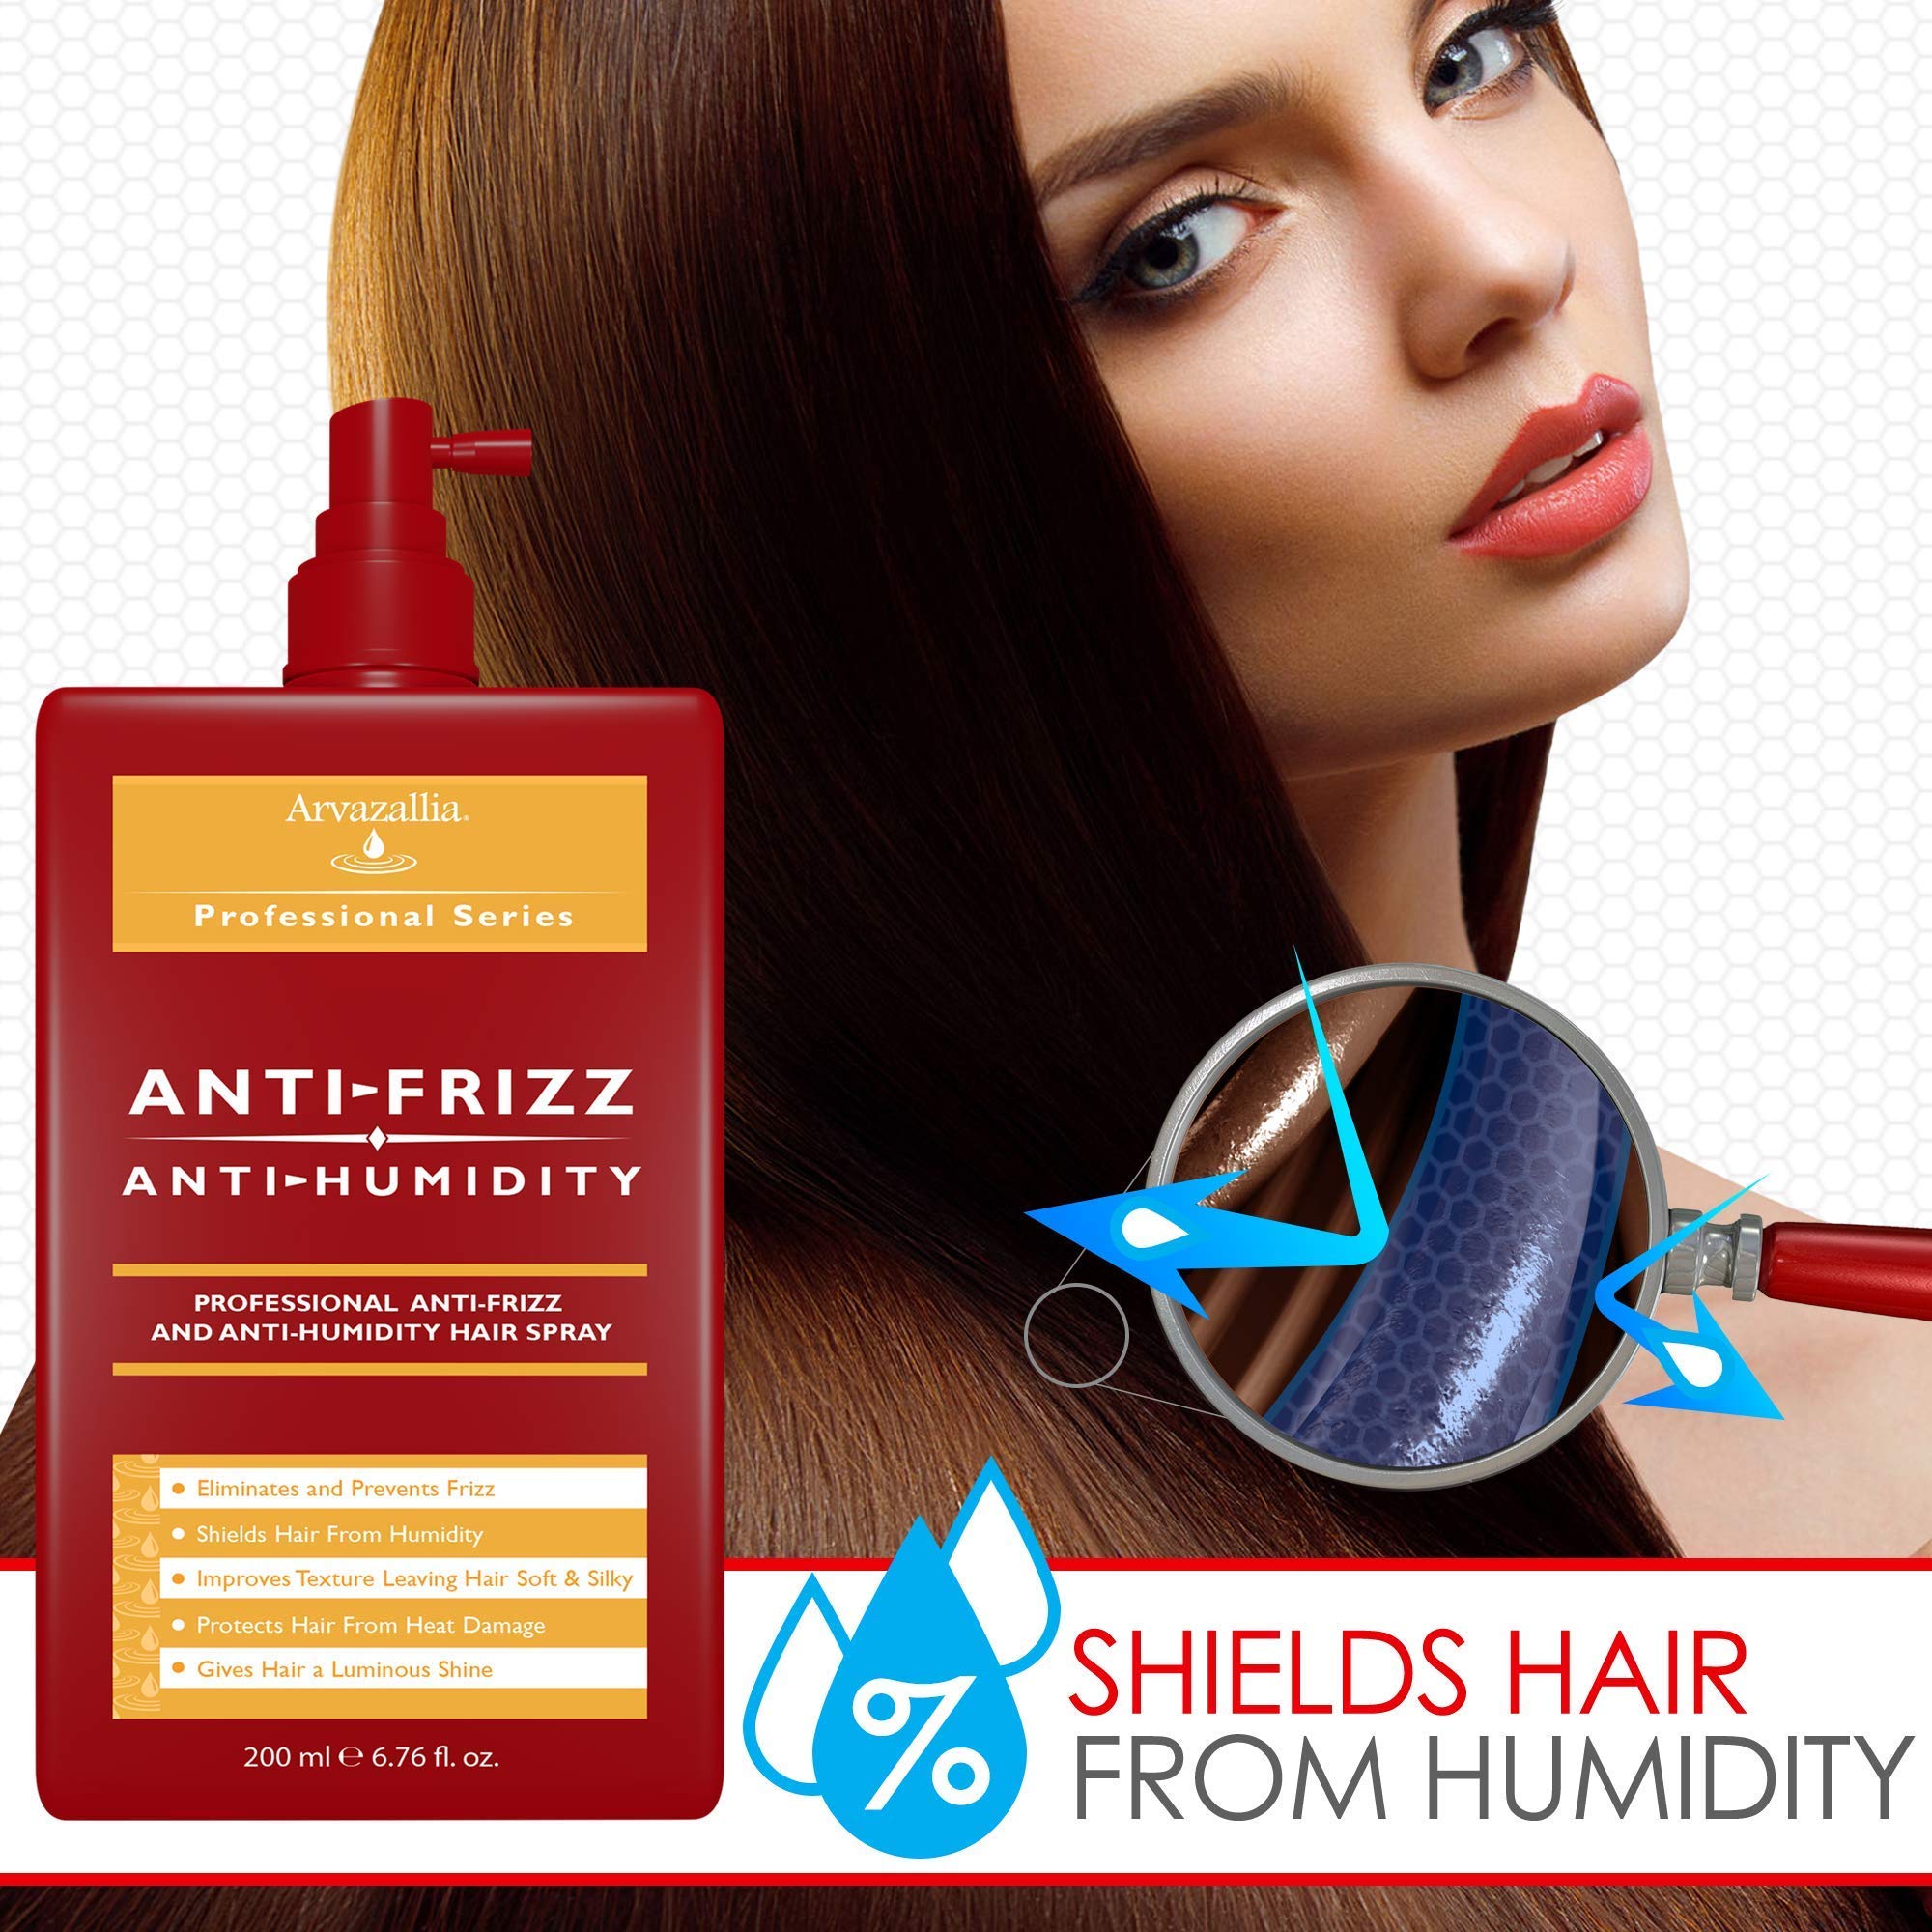 Premium Argan Oil Hair Treatment and Anti-Frizz & Anti-Humidity Hair Spray Bundle - For Gorgeous Soft, Silky, Shiny Hair that Lasts by Arvazallia